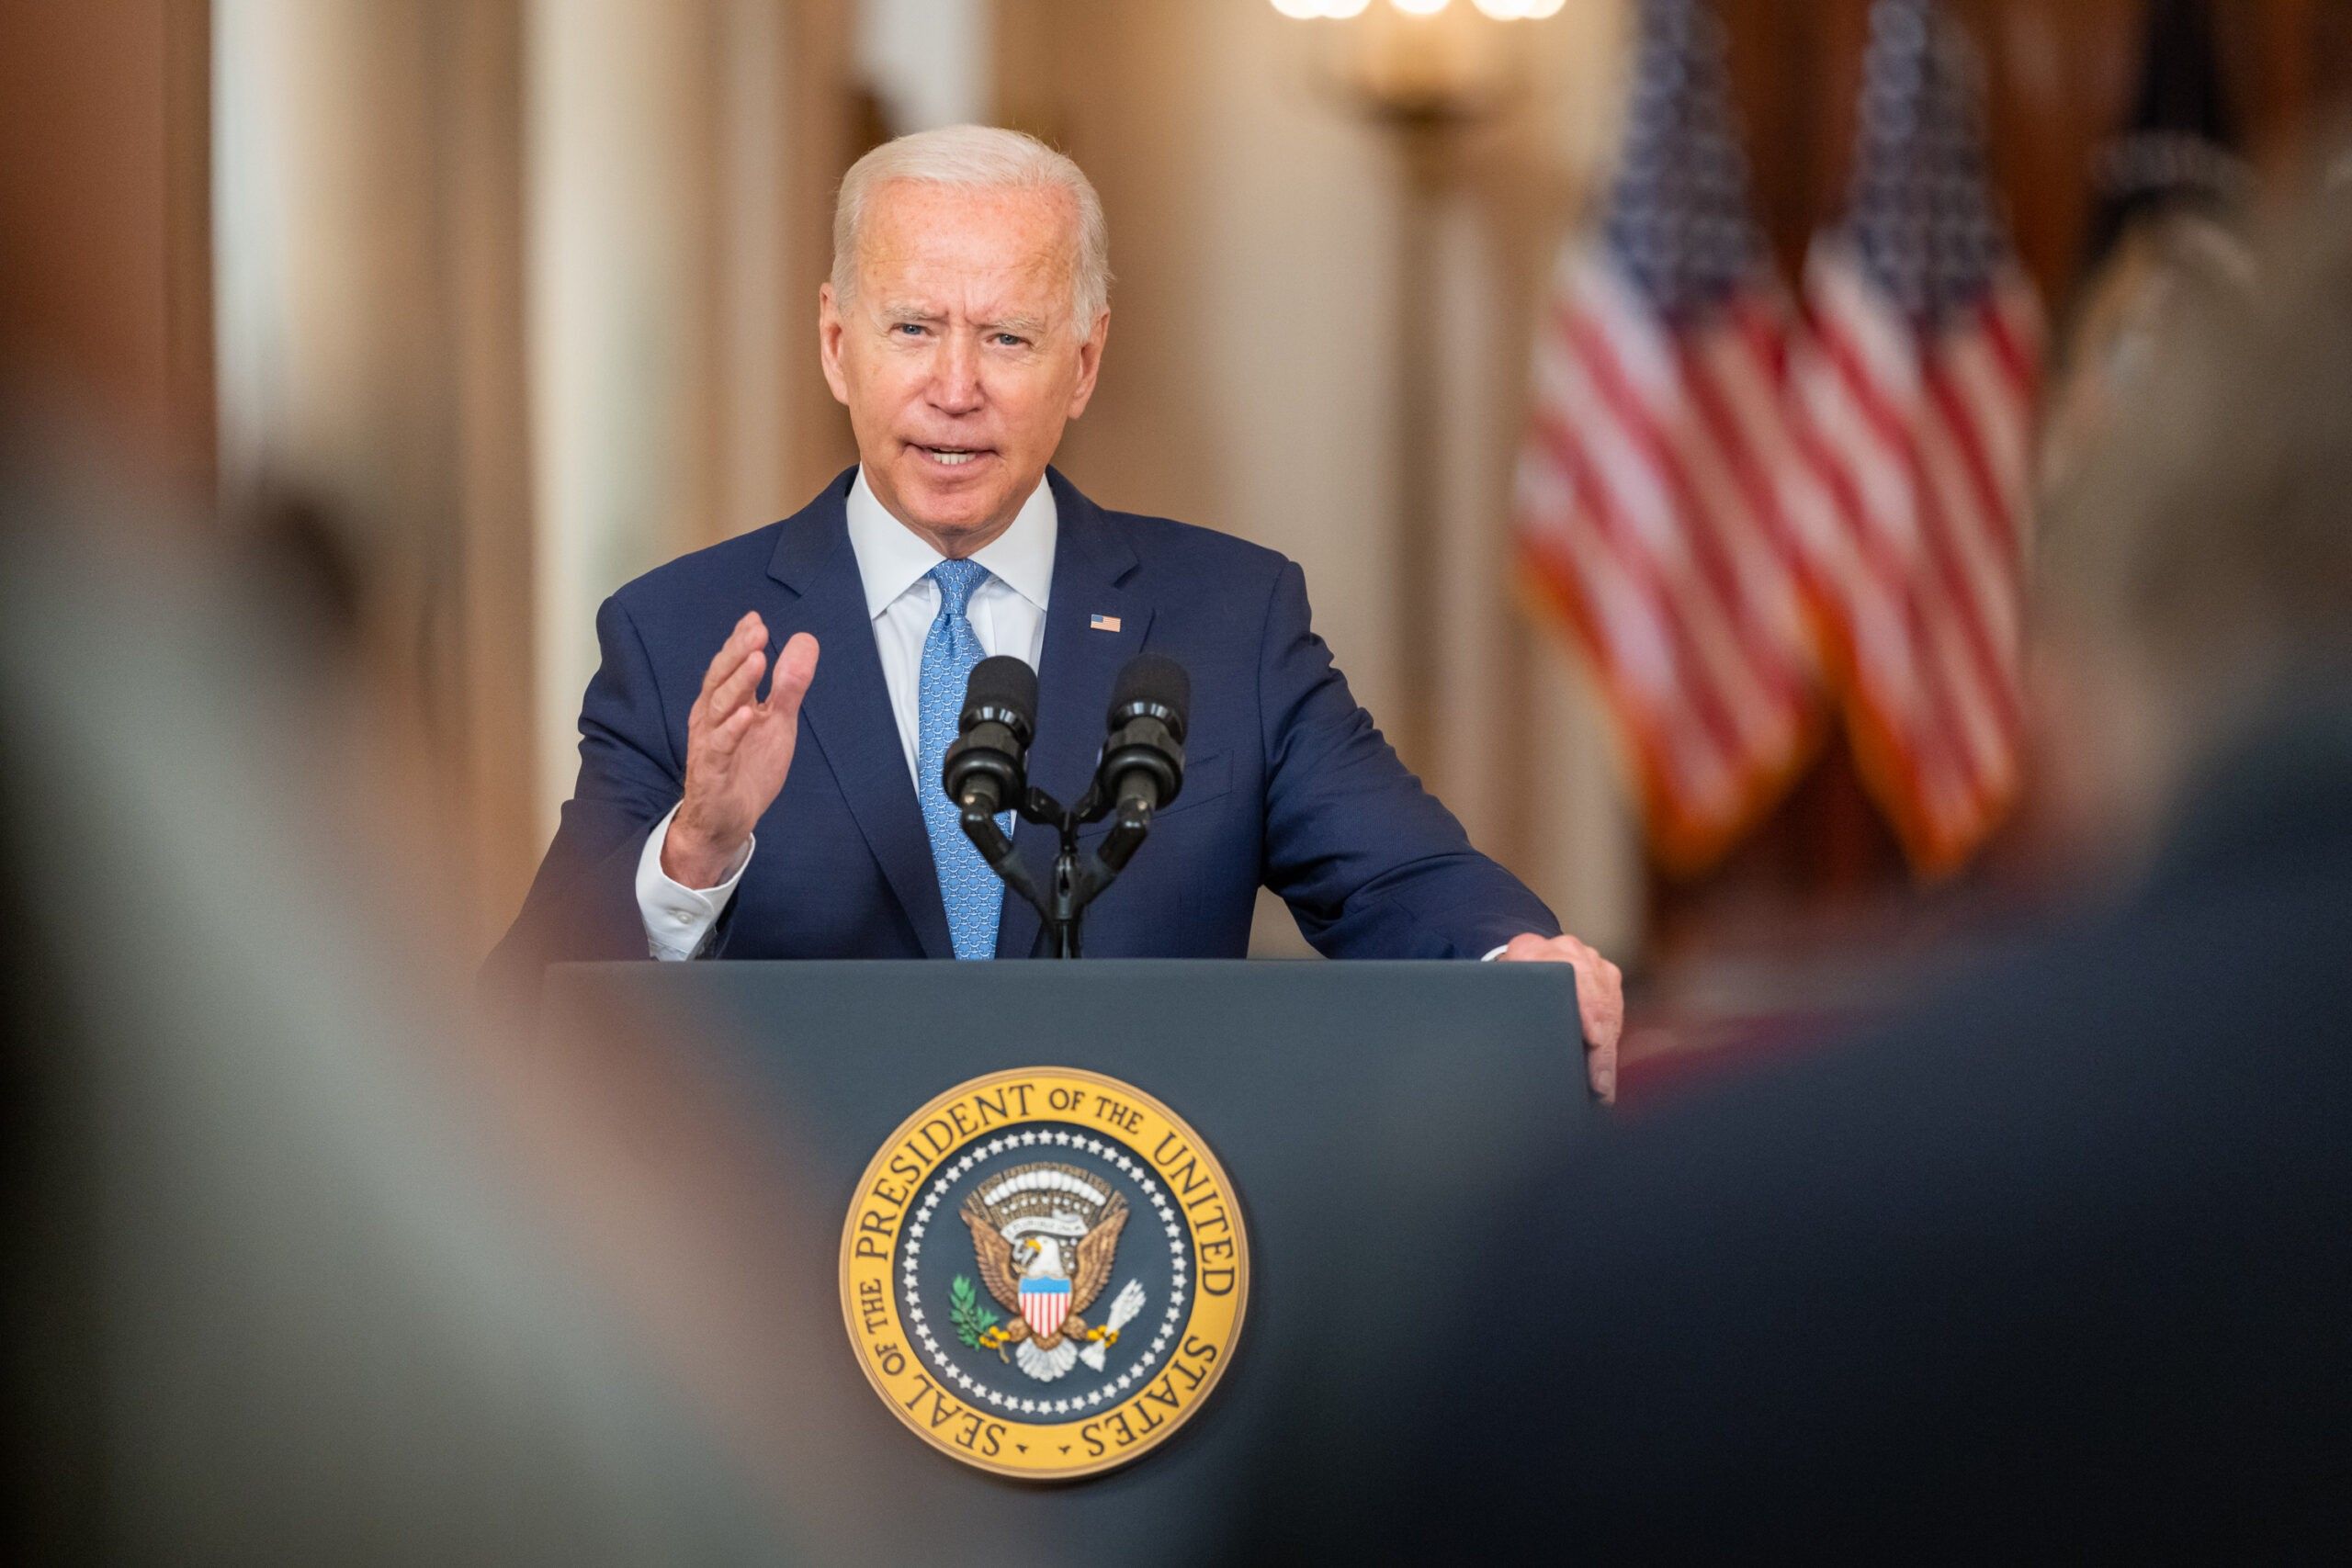 Facing mounting global crises, Biden risks addiction to sanctions